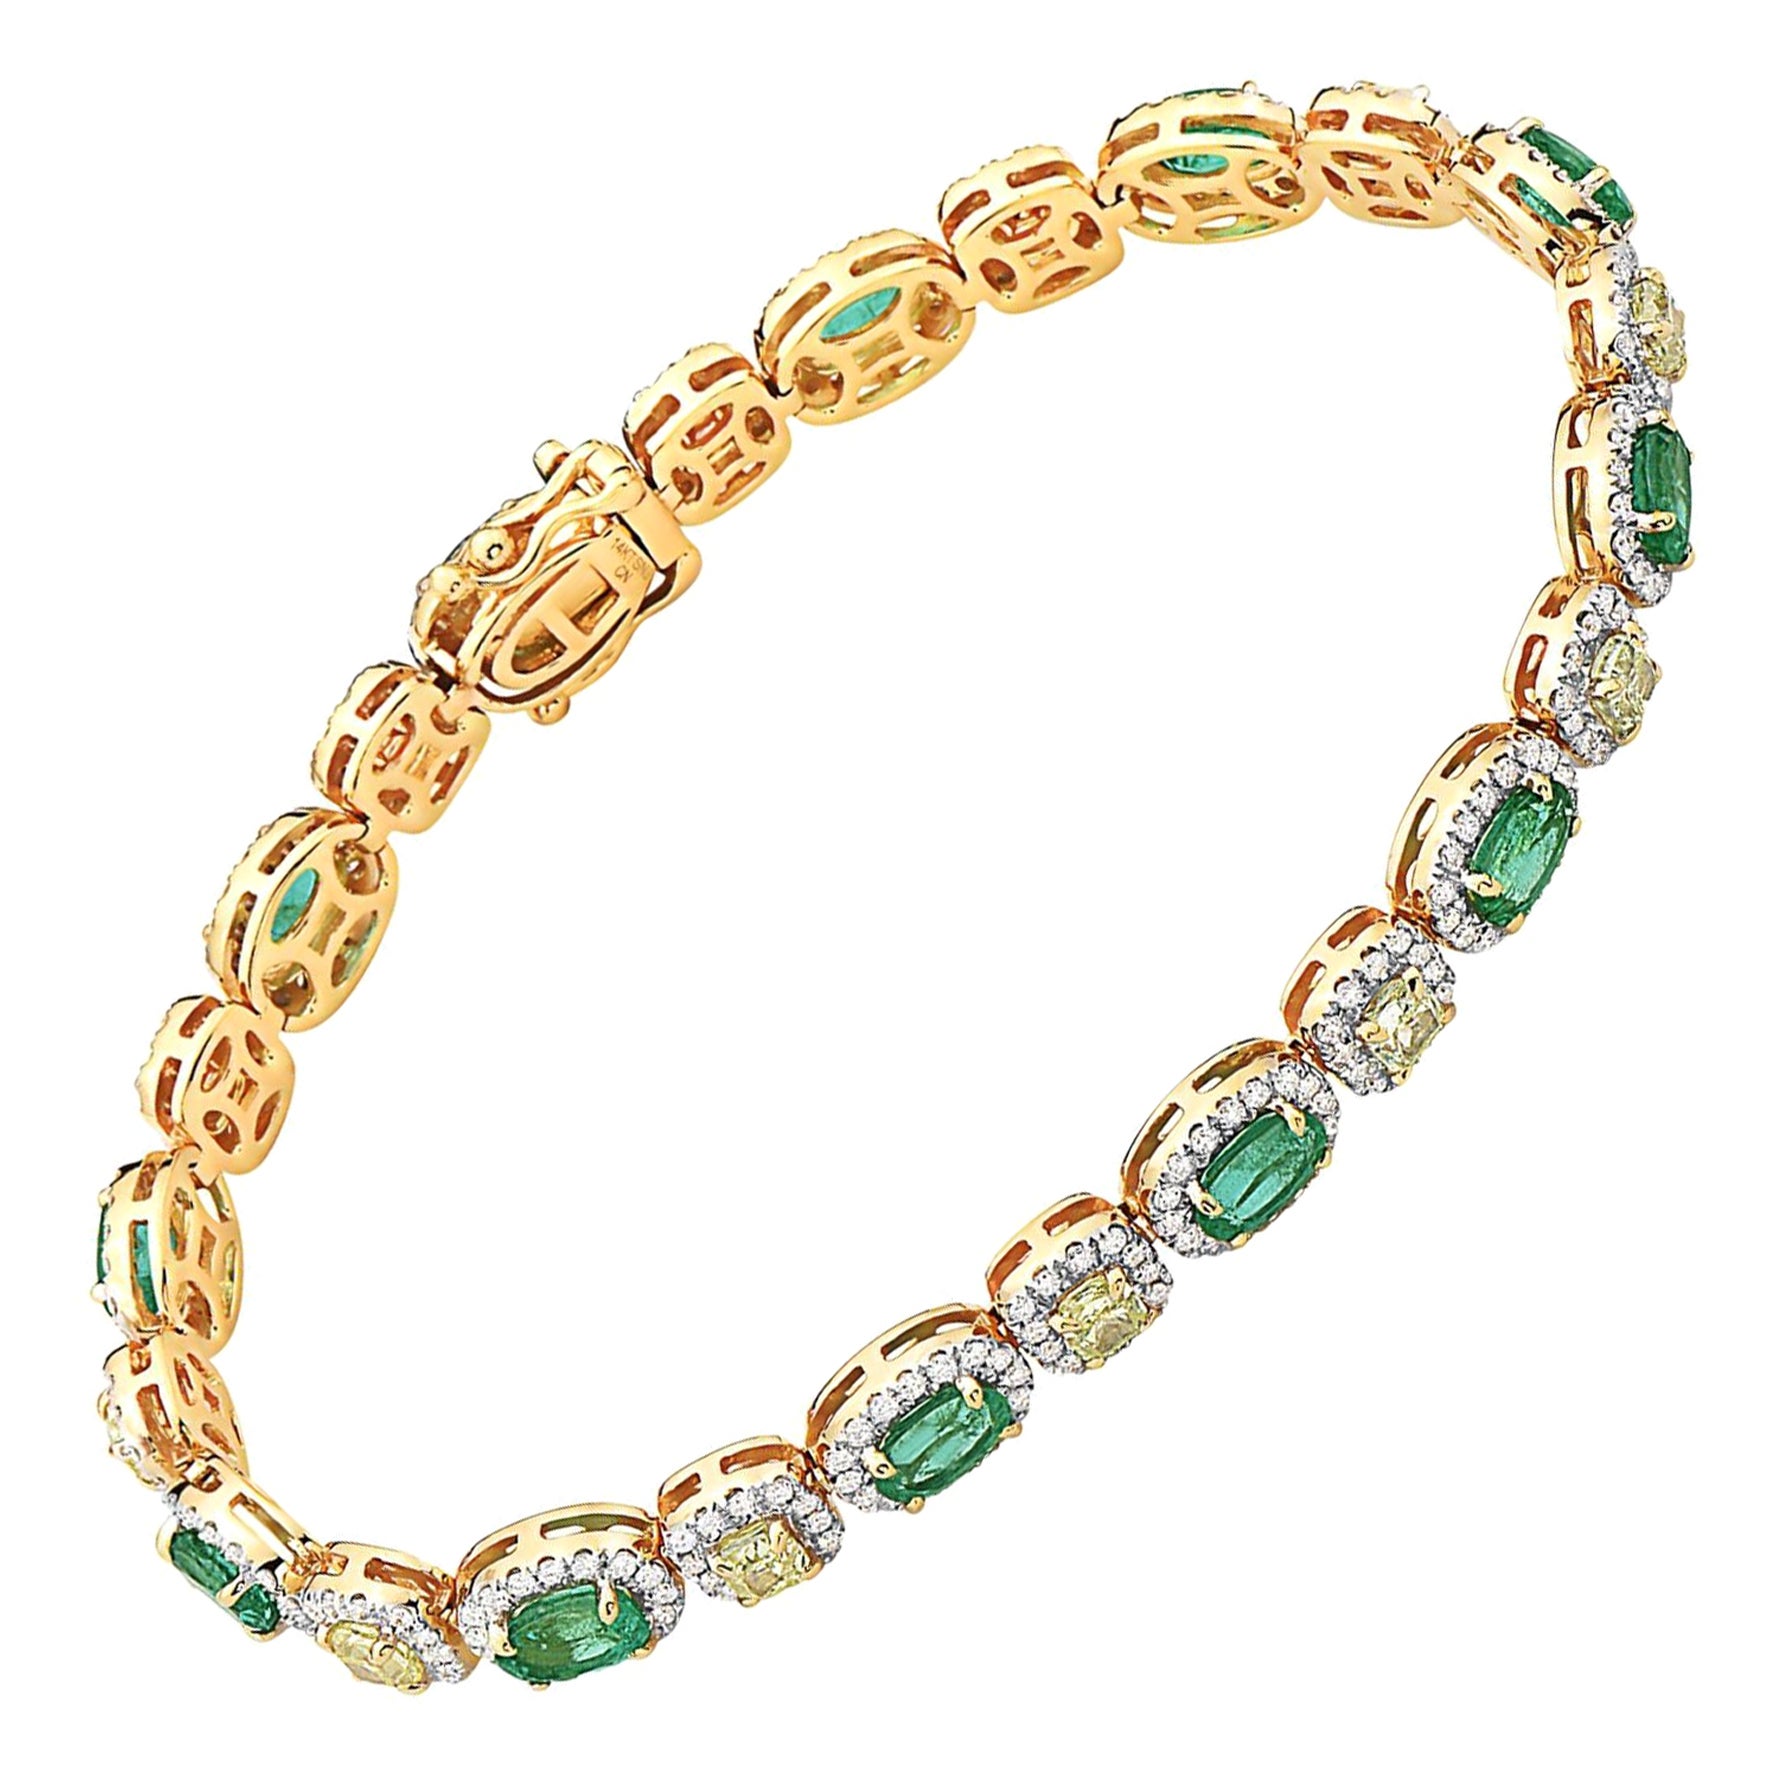 IGI Certified 4.50 Carat Emerald Bracelet with Yellow & White Diamonds in 14K